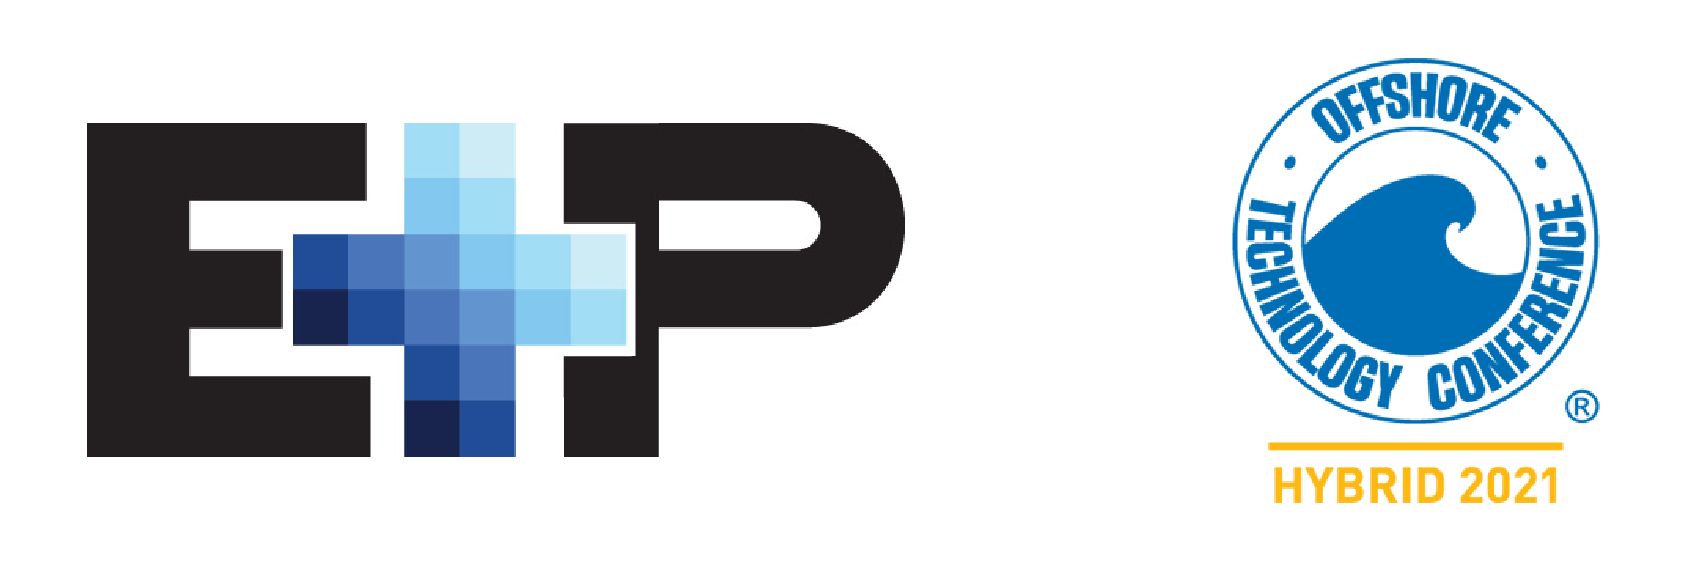 E-P Magazine Offshore Technology Conference Hybrid 2021 Logos